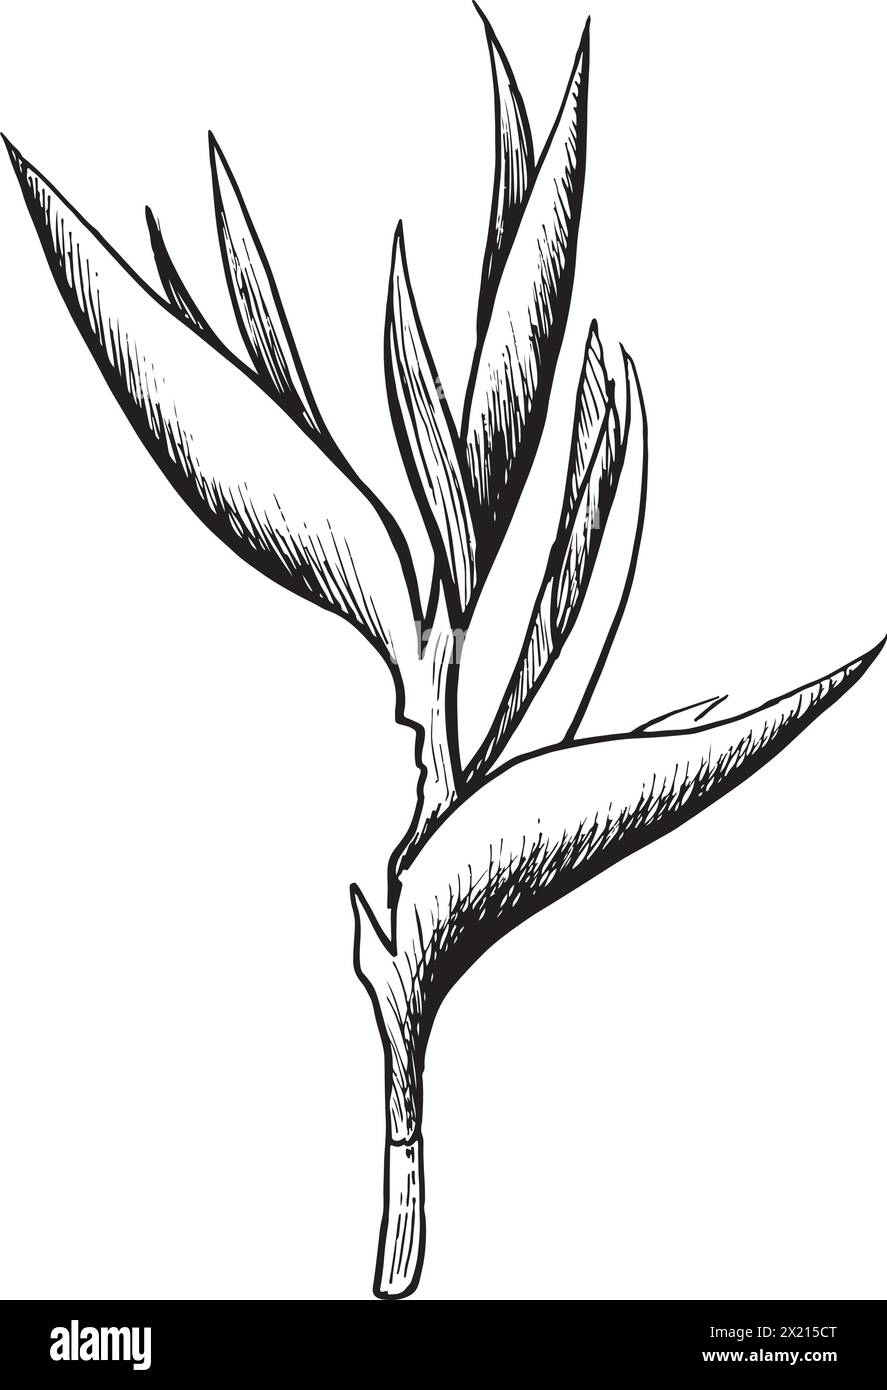 Line art strelitzia or Bird of Paradise flower illustration. outline sketch hand drawn Stock Vector